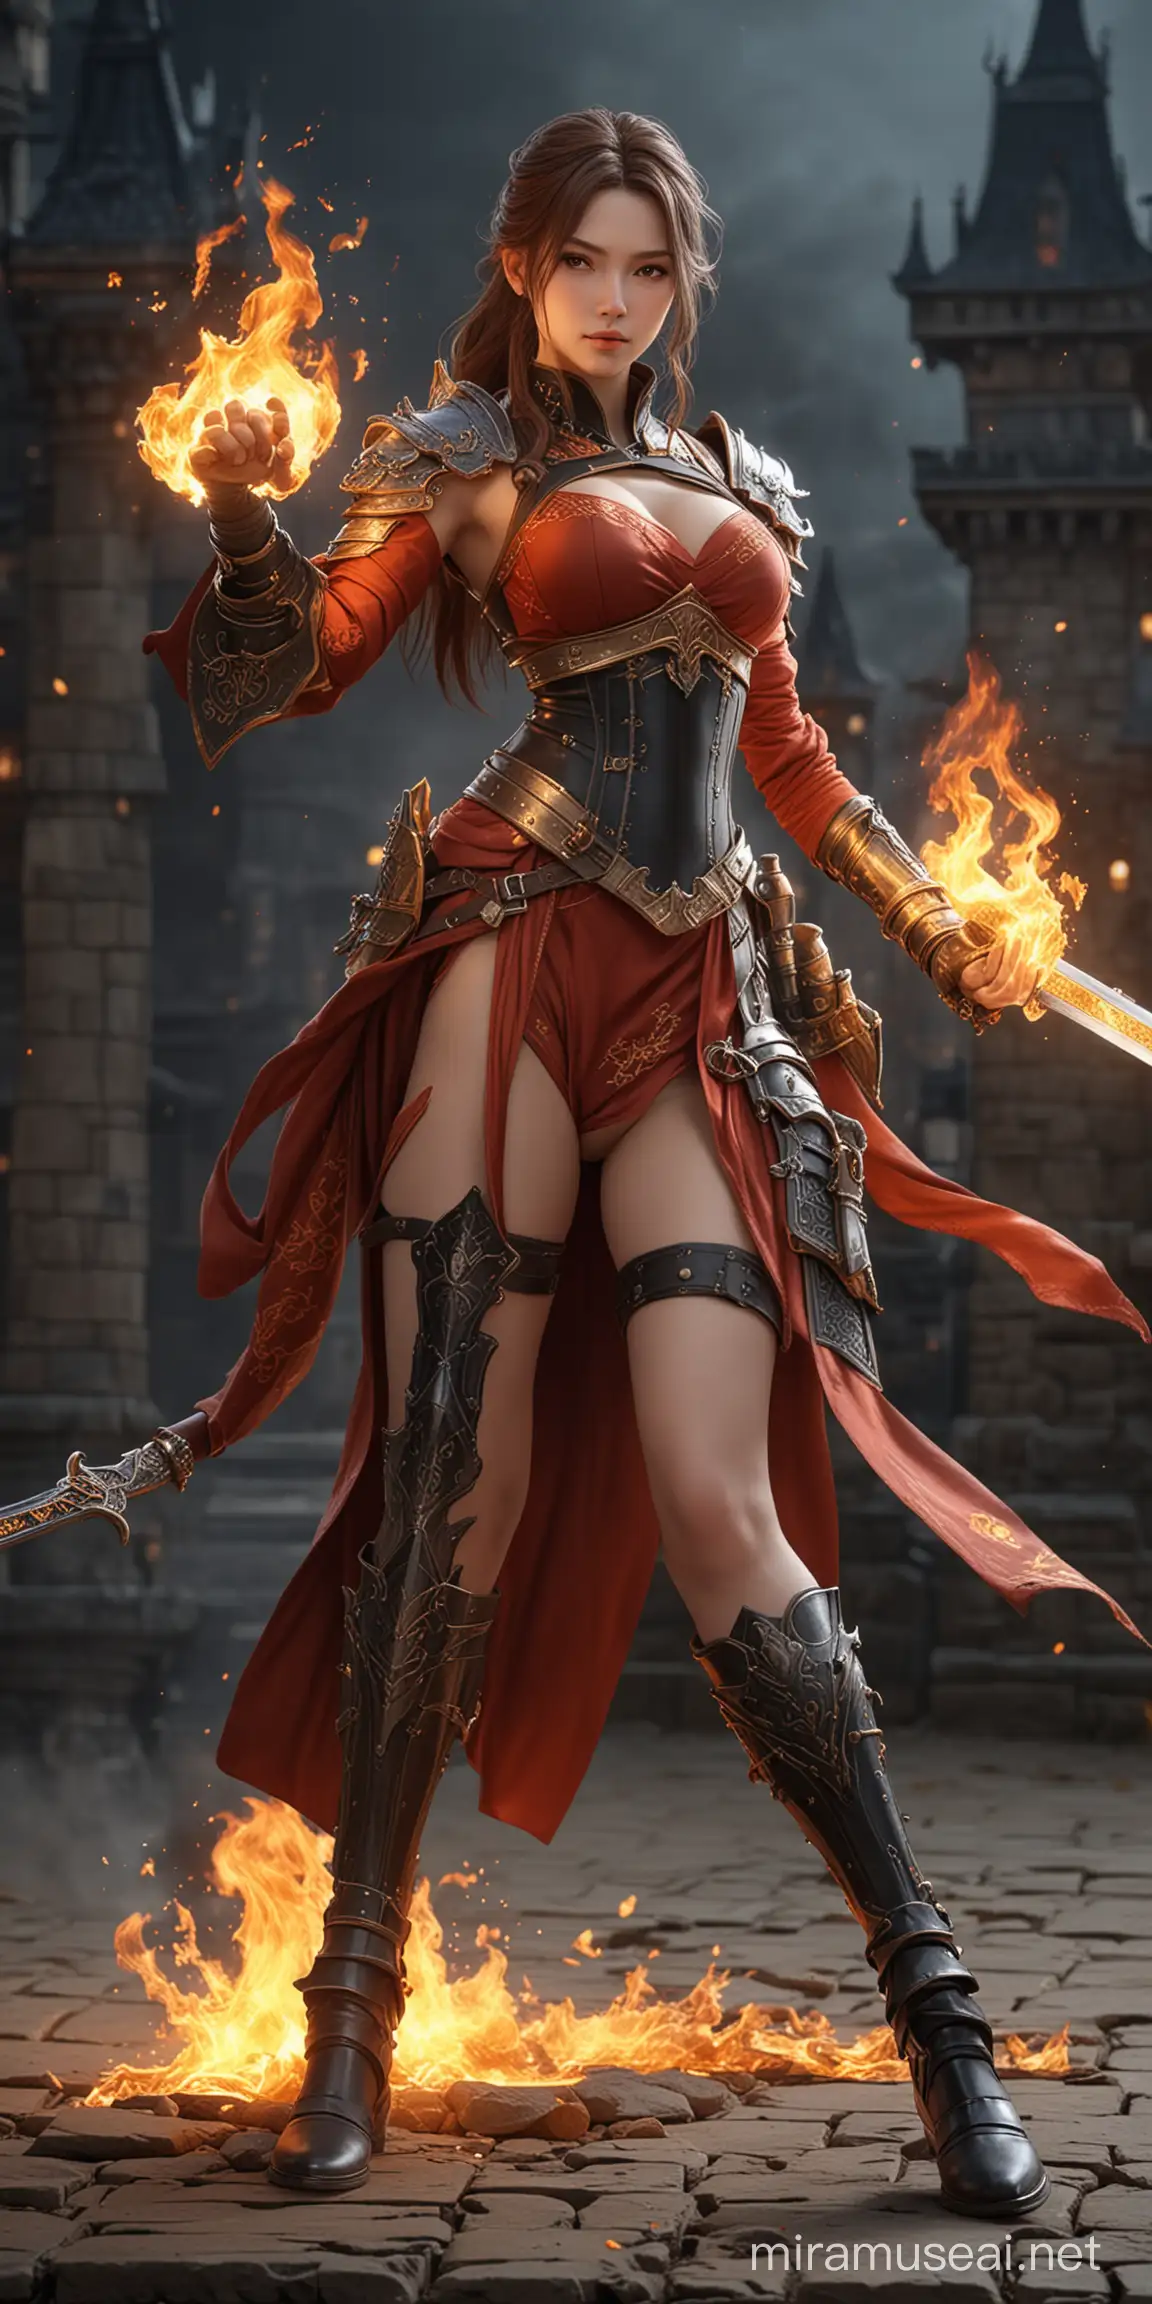 Idol Warrior Princess with Fiery Sword in Detailed Castle Studio